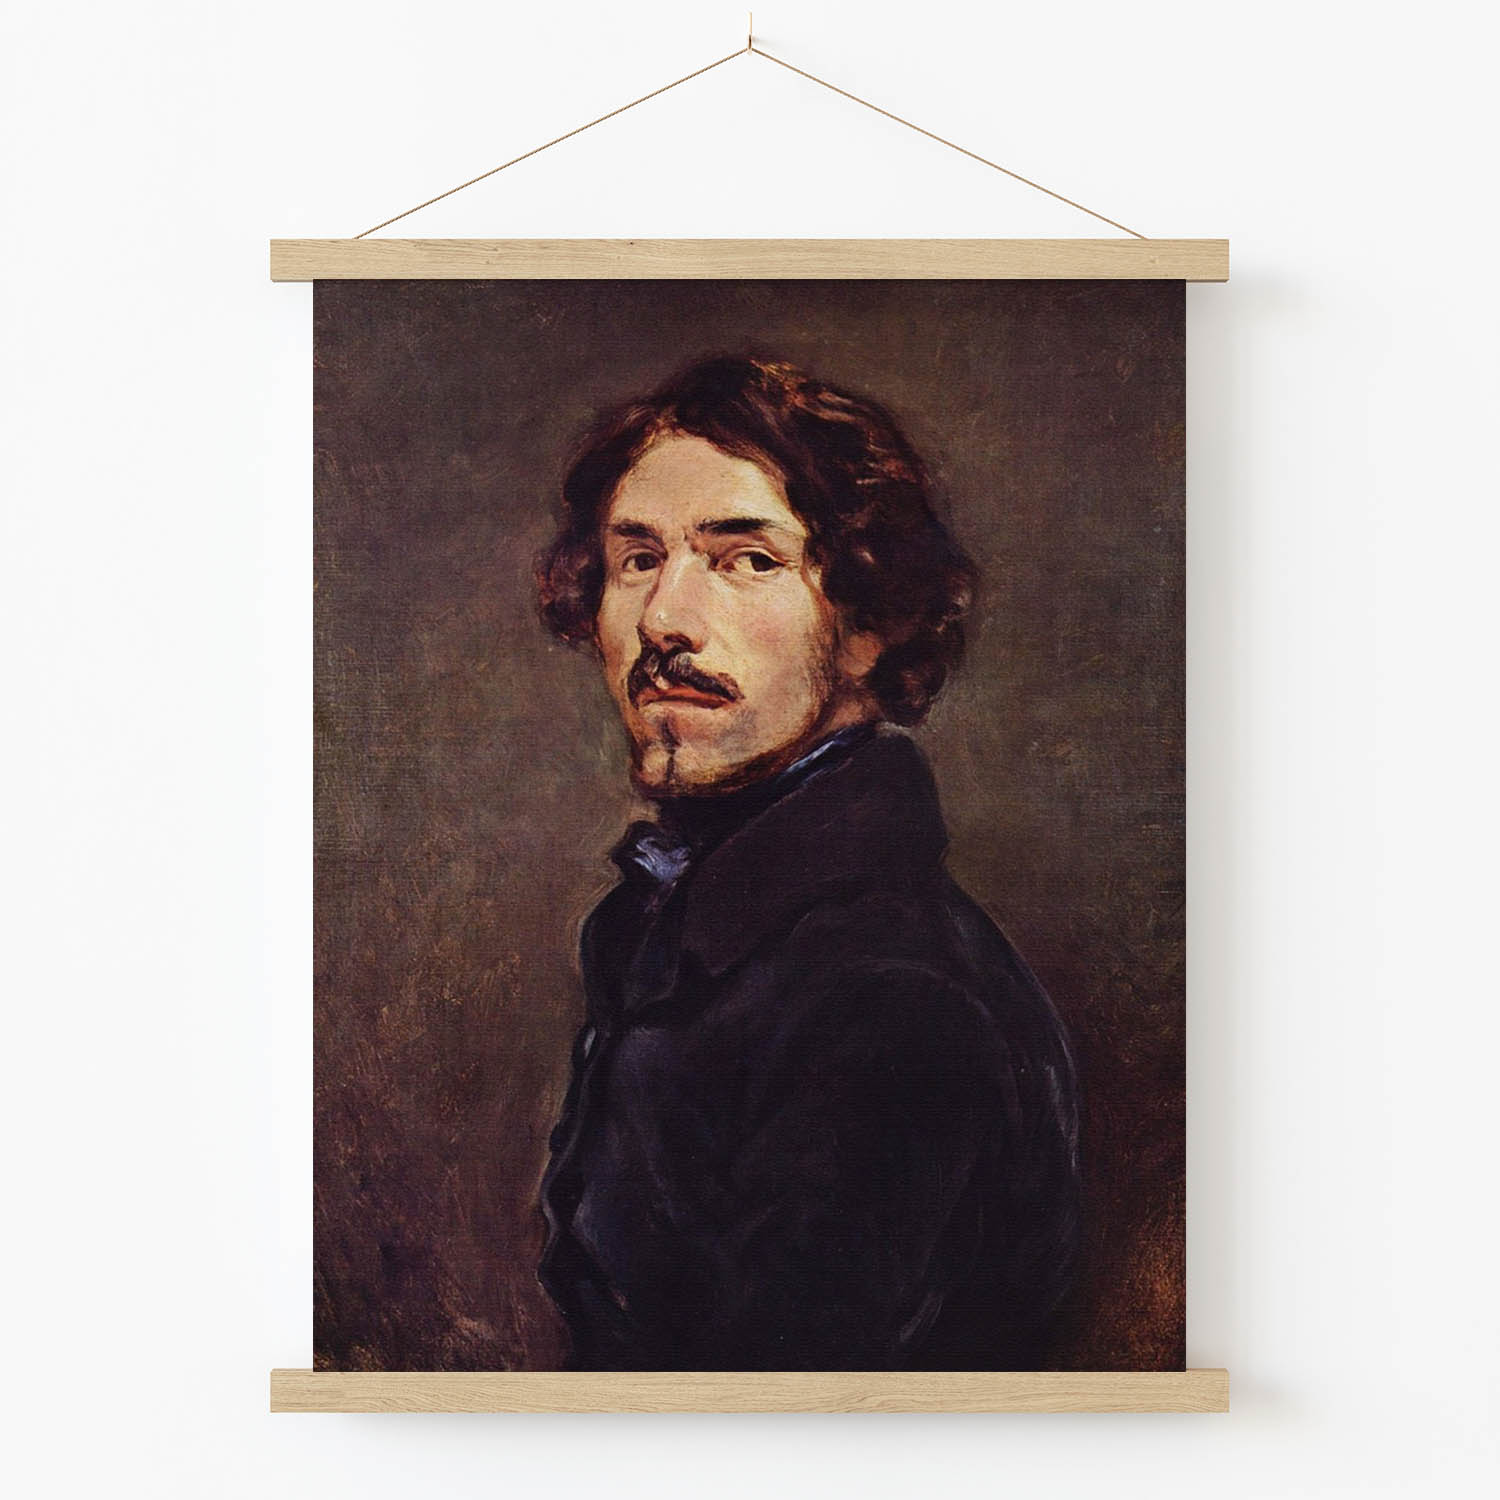 Victorian Era Man Art Print in Wood Hanger Frame on Wall